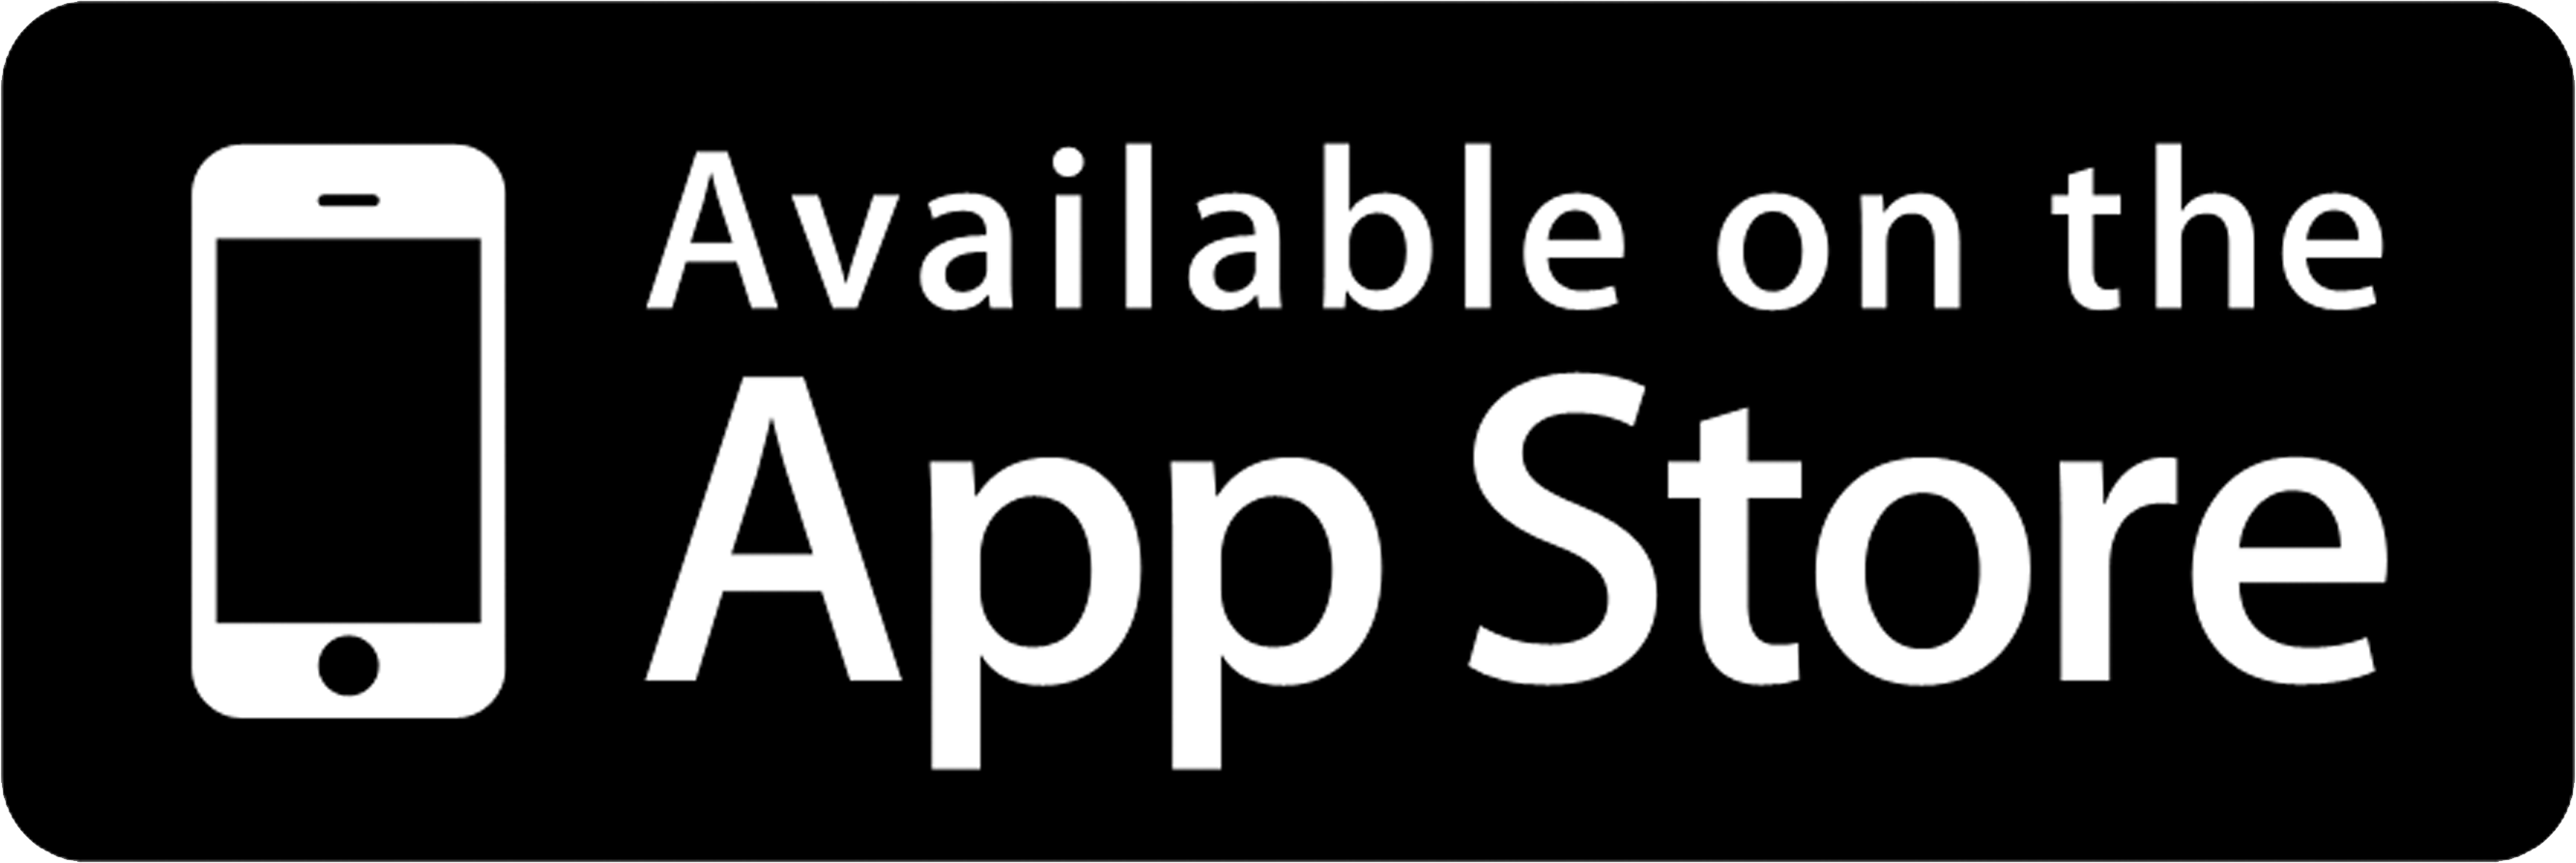 AYCL iPhone App